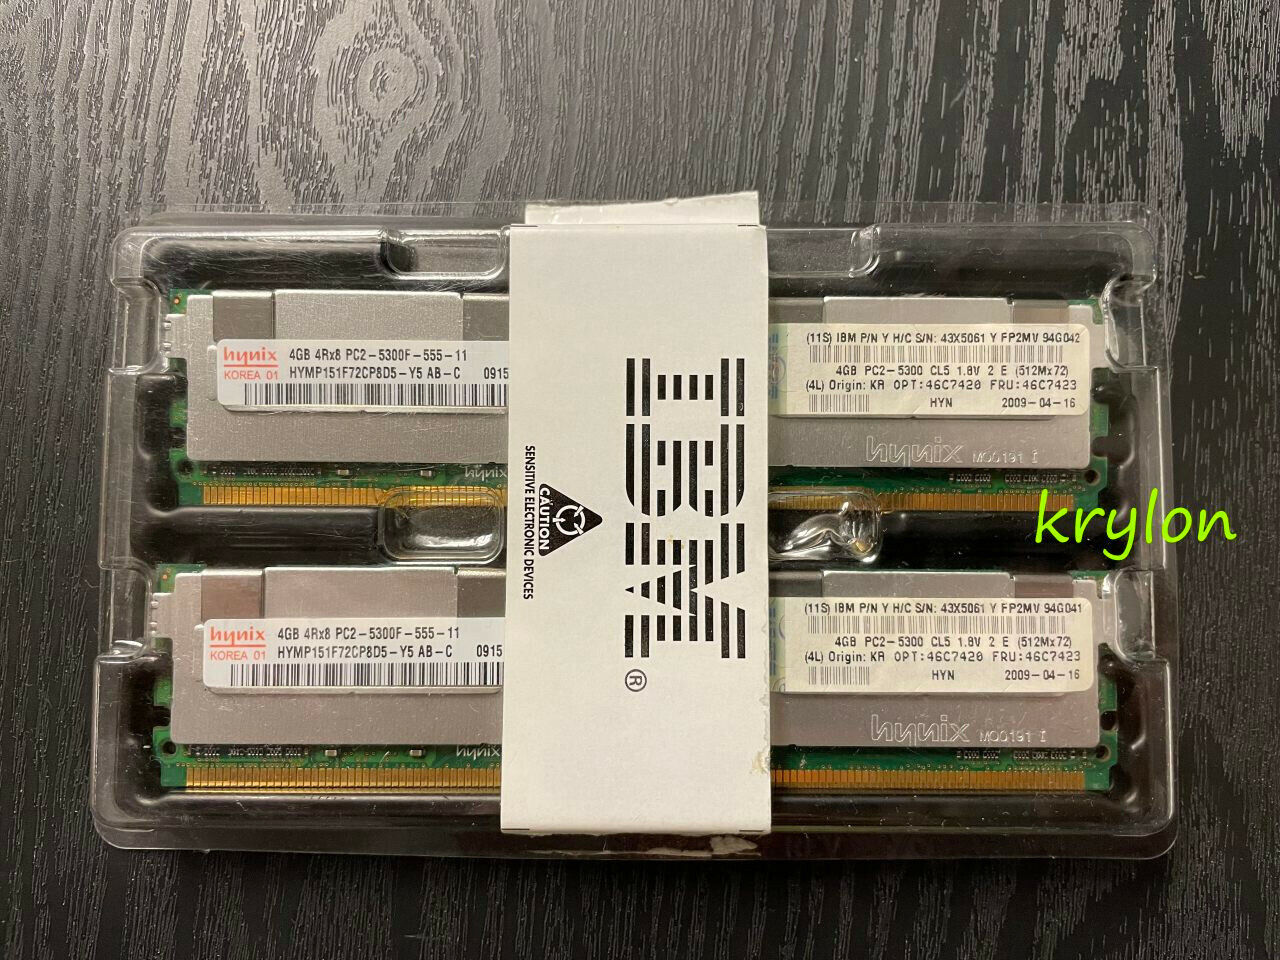 IBM hynix 8GB Kit (2x4GB) 4Rx8 PC2-5300F CL5 DDR2 FBDIMM SERVER RAM Memory Kit